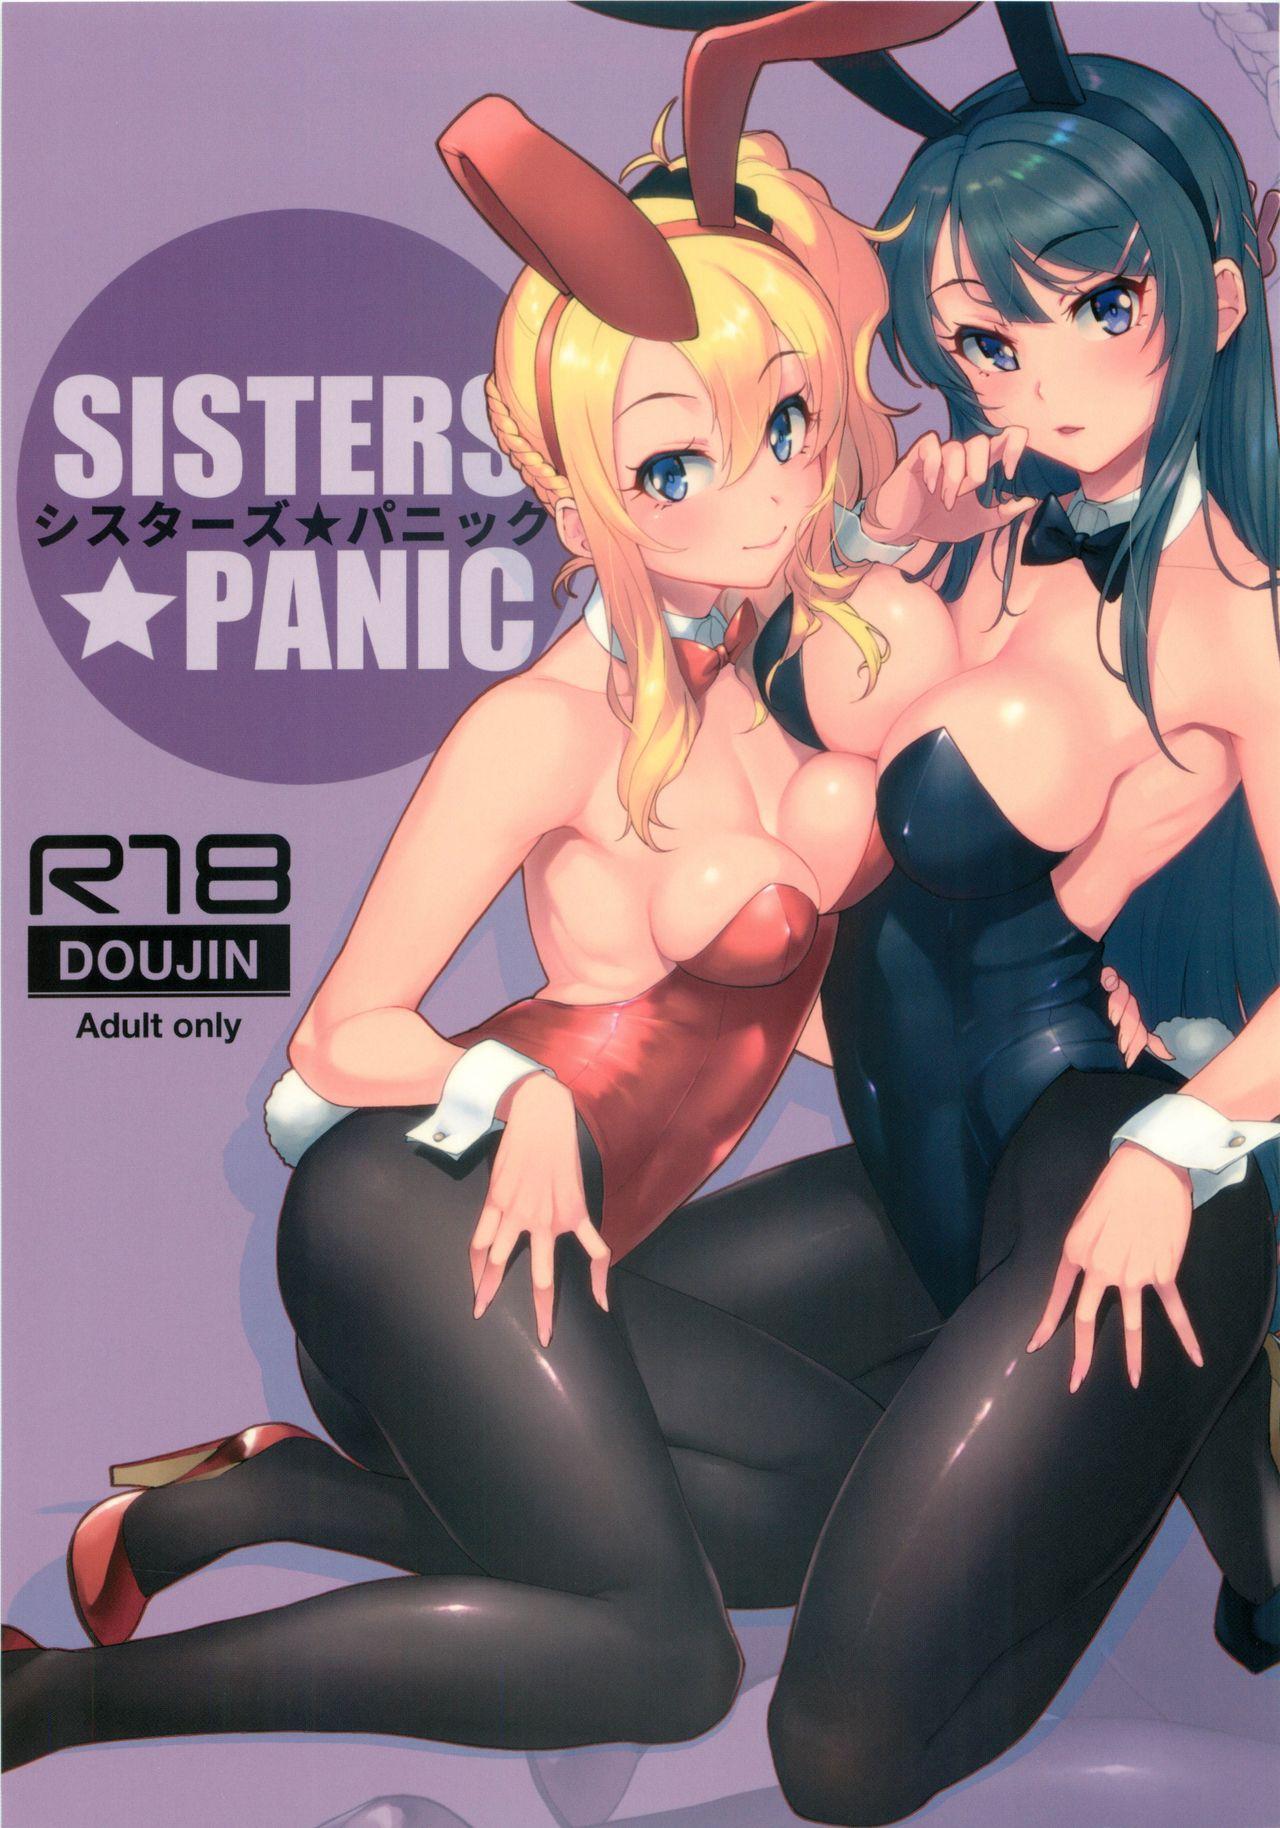 Leaked Sisters Panic - Seishun buta yarou wa bunny girl senpai no yume o minai Teasing - Picture 1